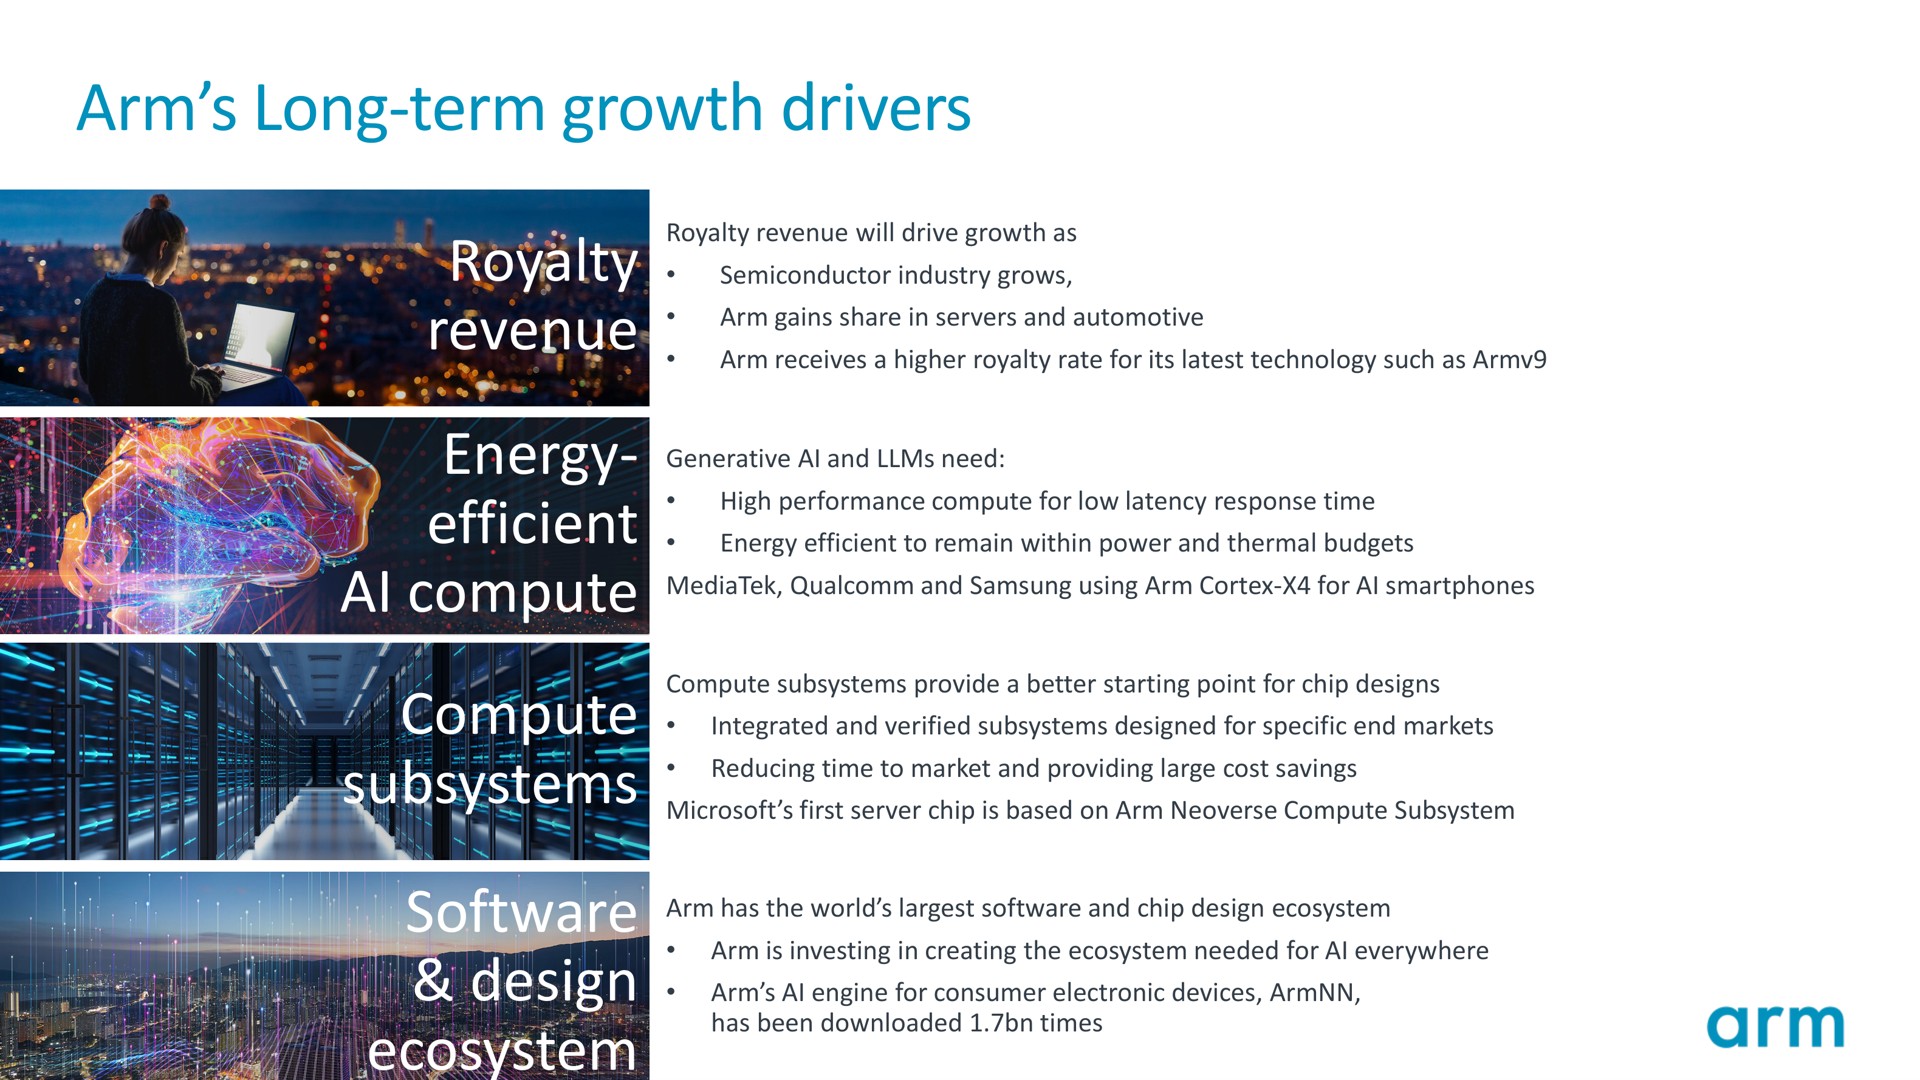 arm long term growth drivers royalty revenue energy efficient compute compute subsystems design ecosystem venue | SoftBank